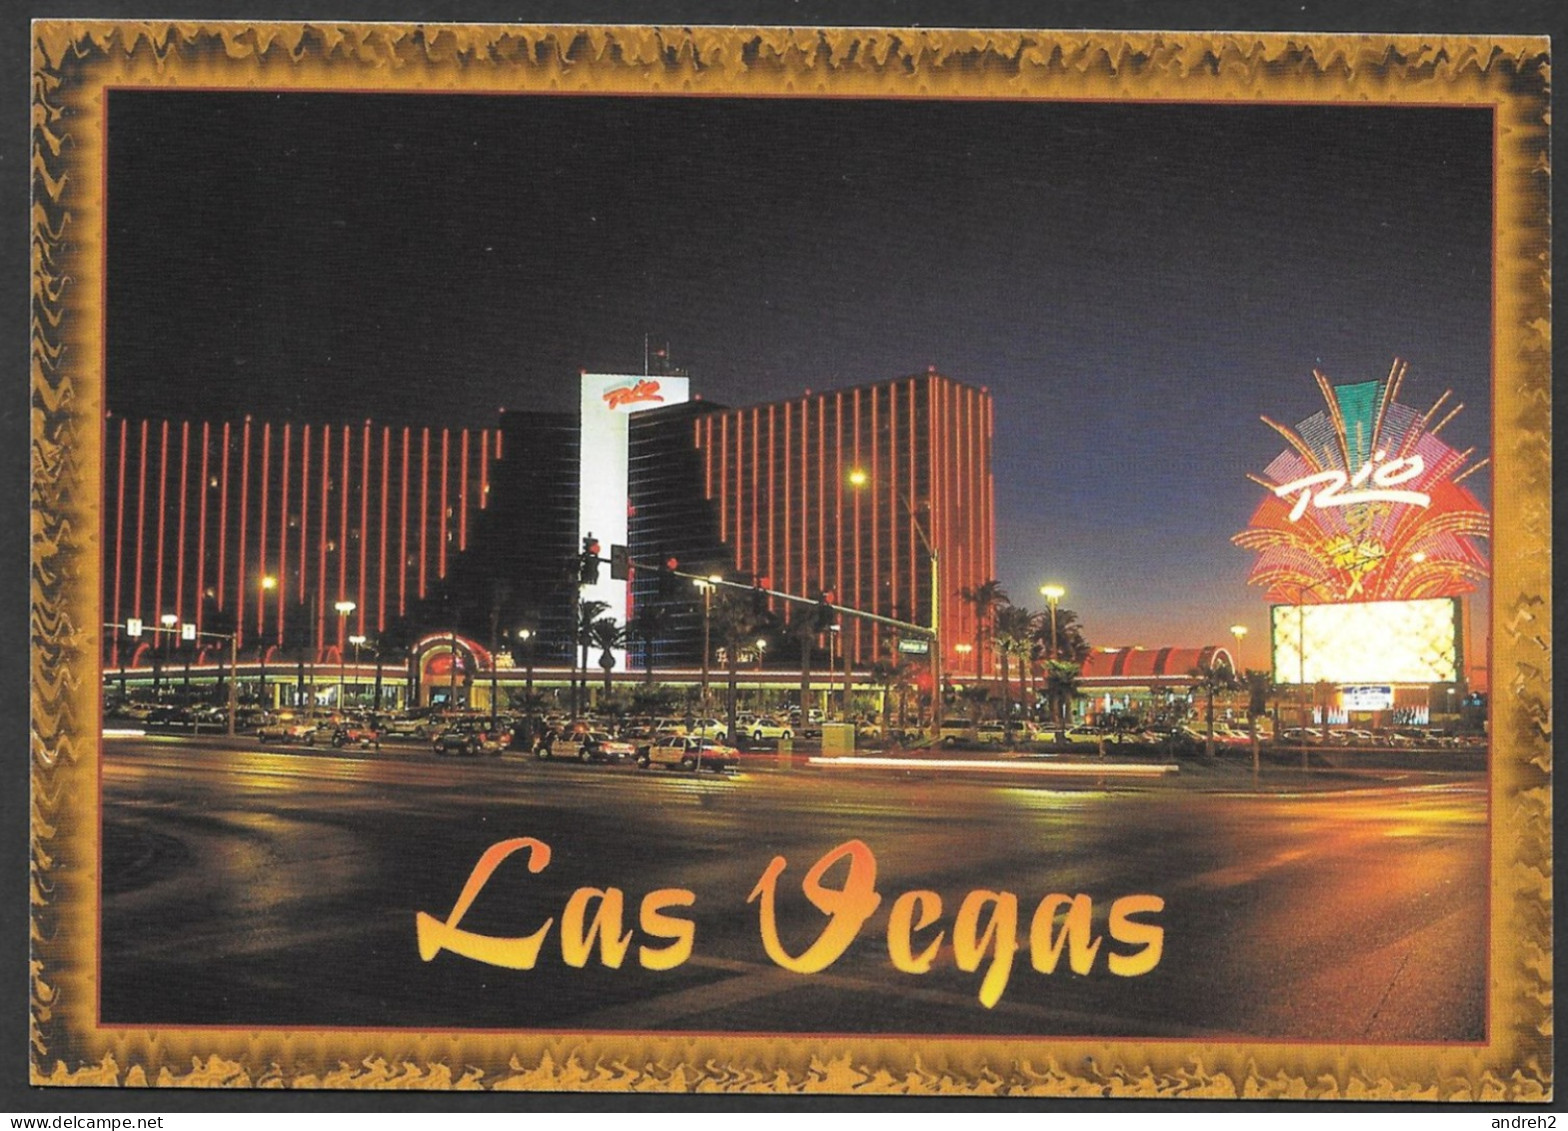 Las Vegas  Nevada - Rio Hotel And Casino - Photo Buddy Moffet & John Hinde Curteich - Las Vegas